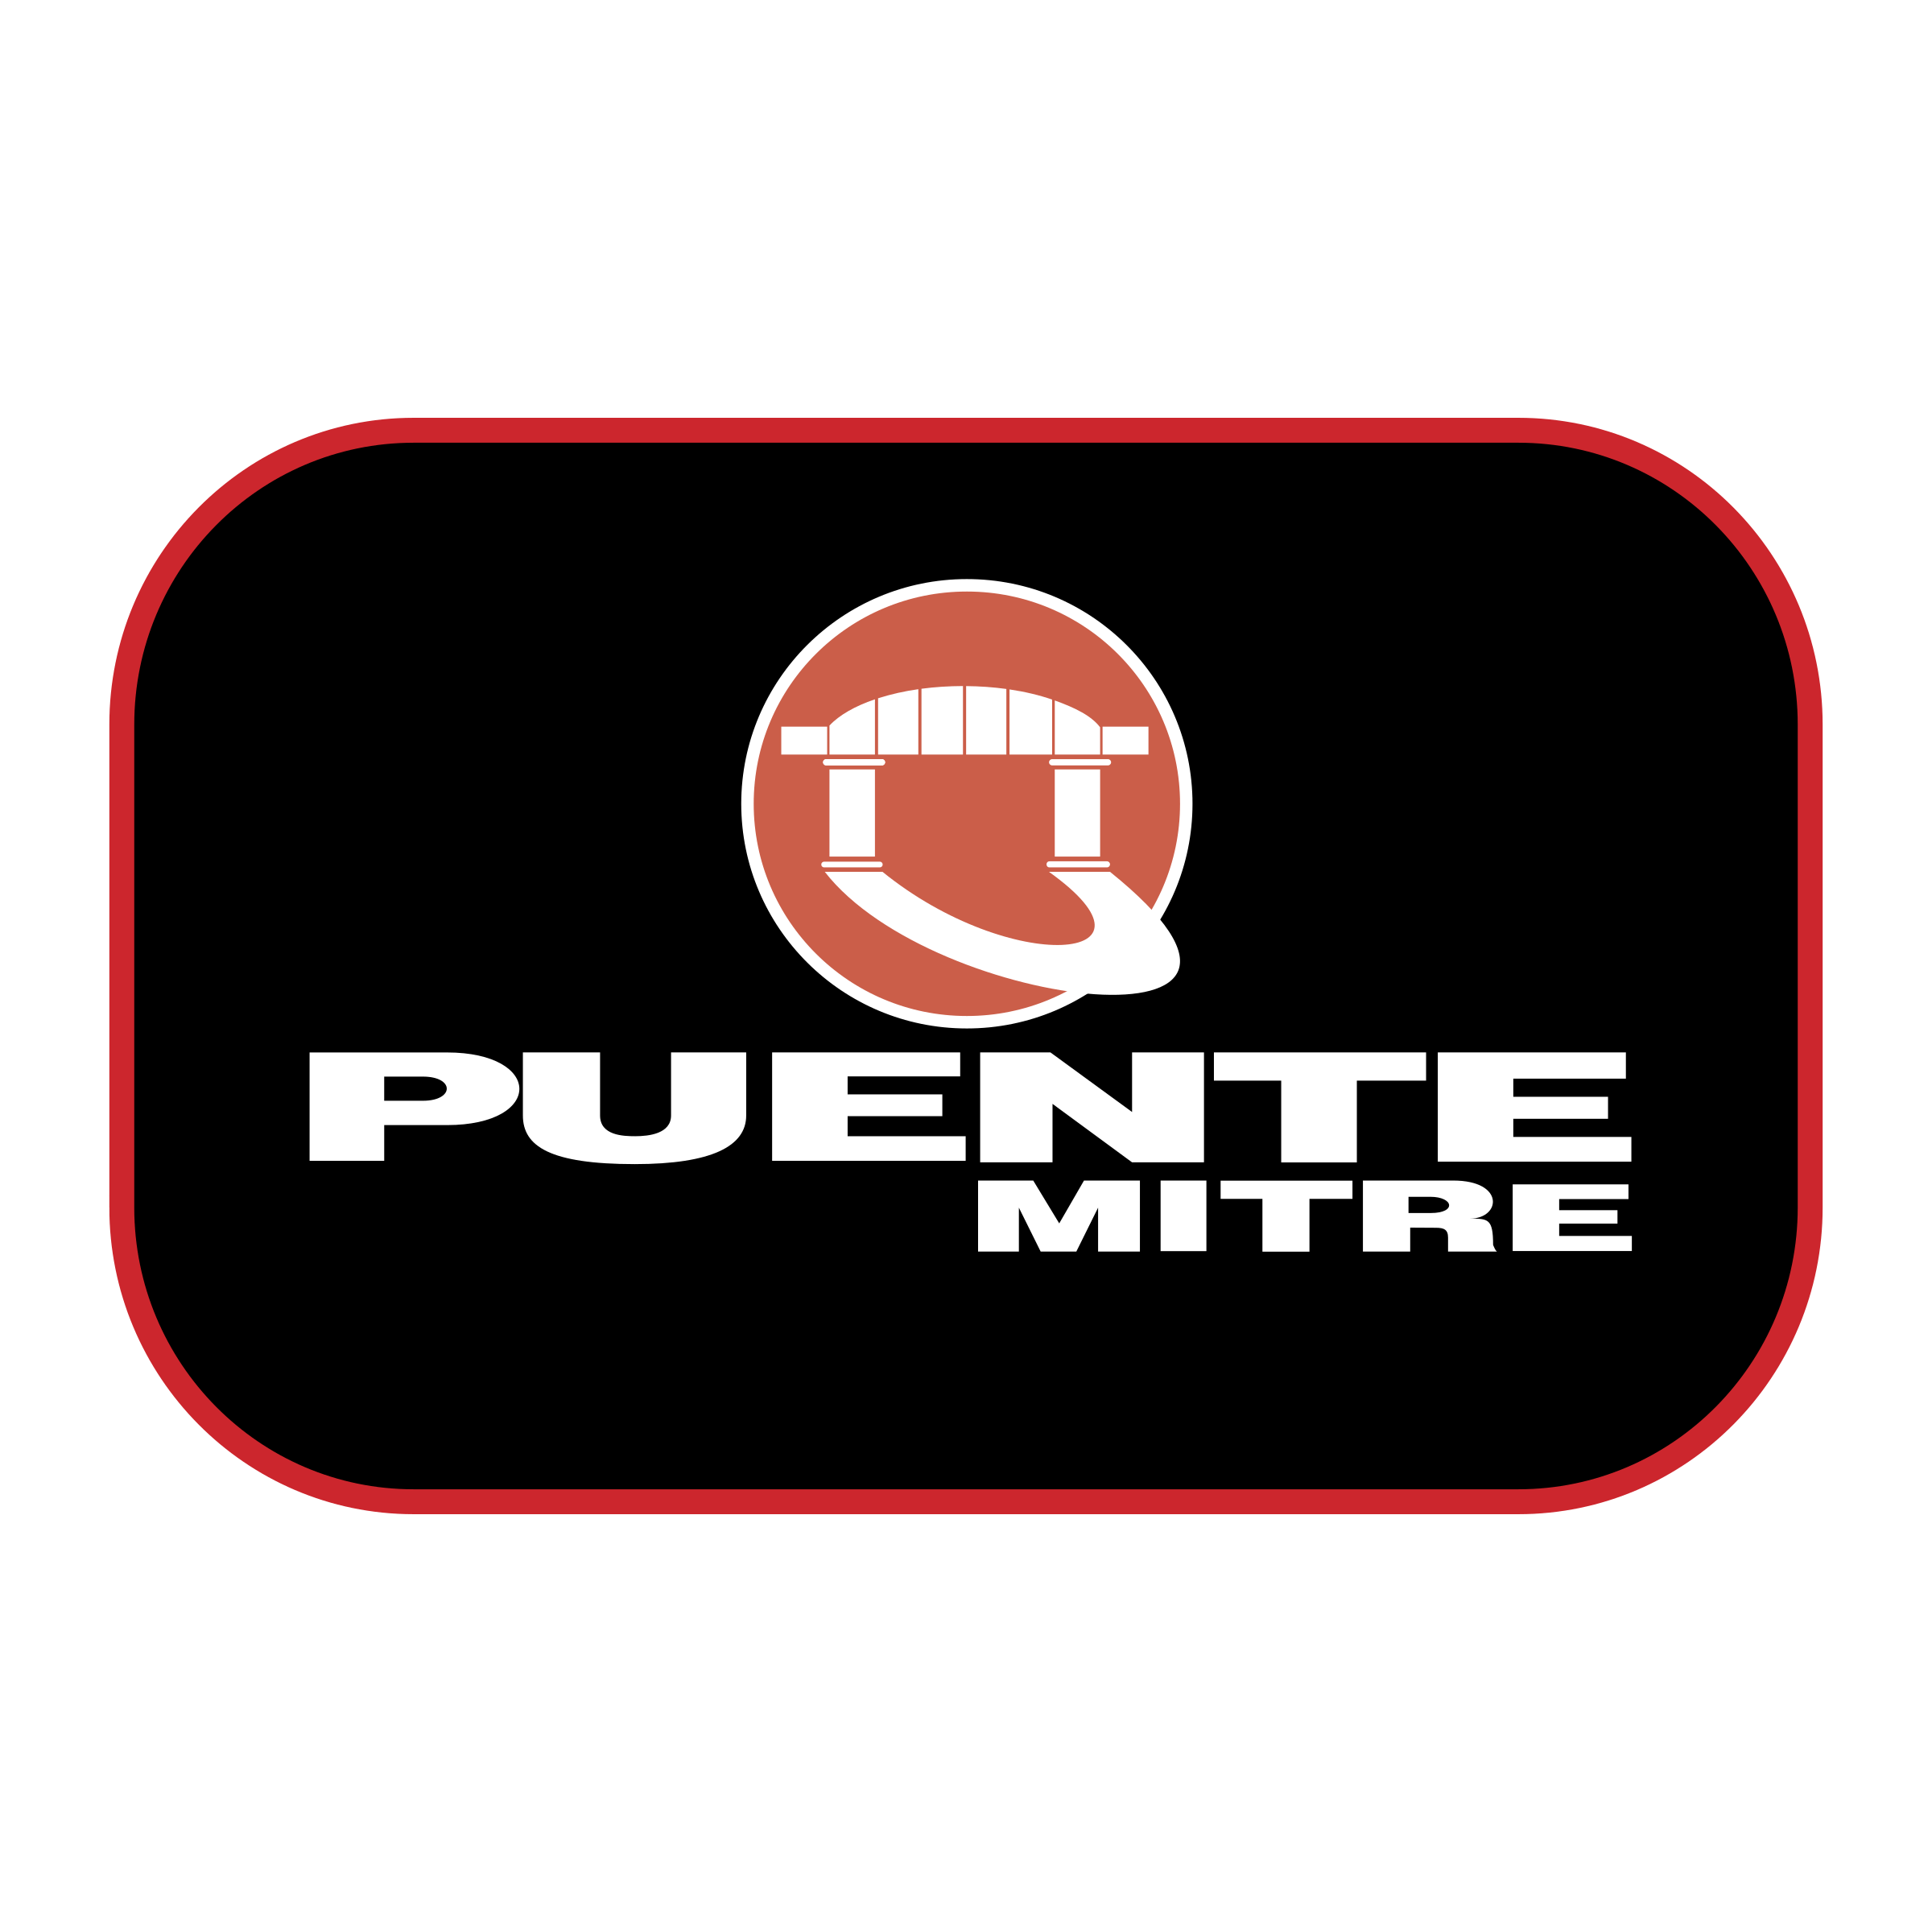 Mitre Logo - Puente Mitre Logo PNG Transparent & SVG Vector